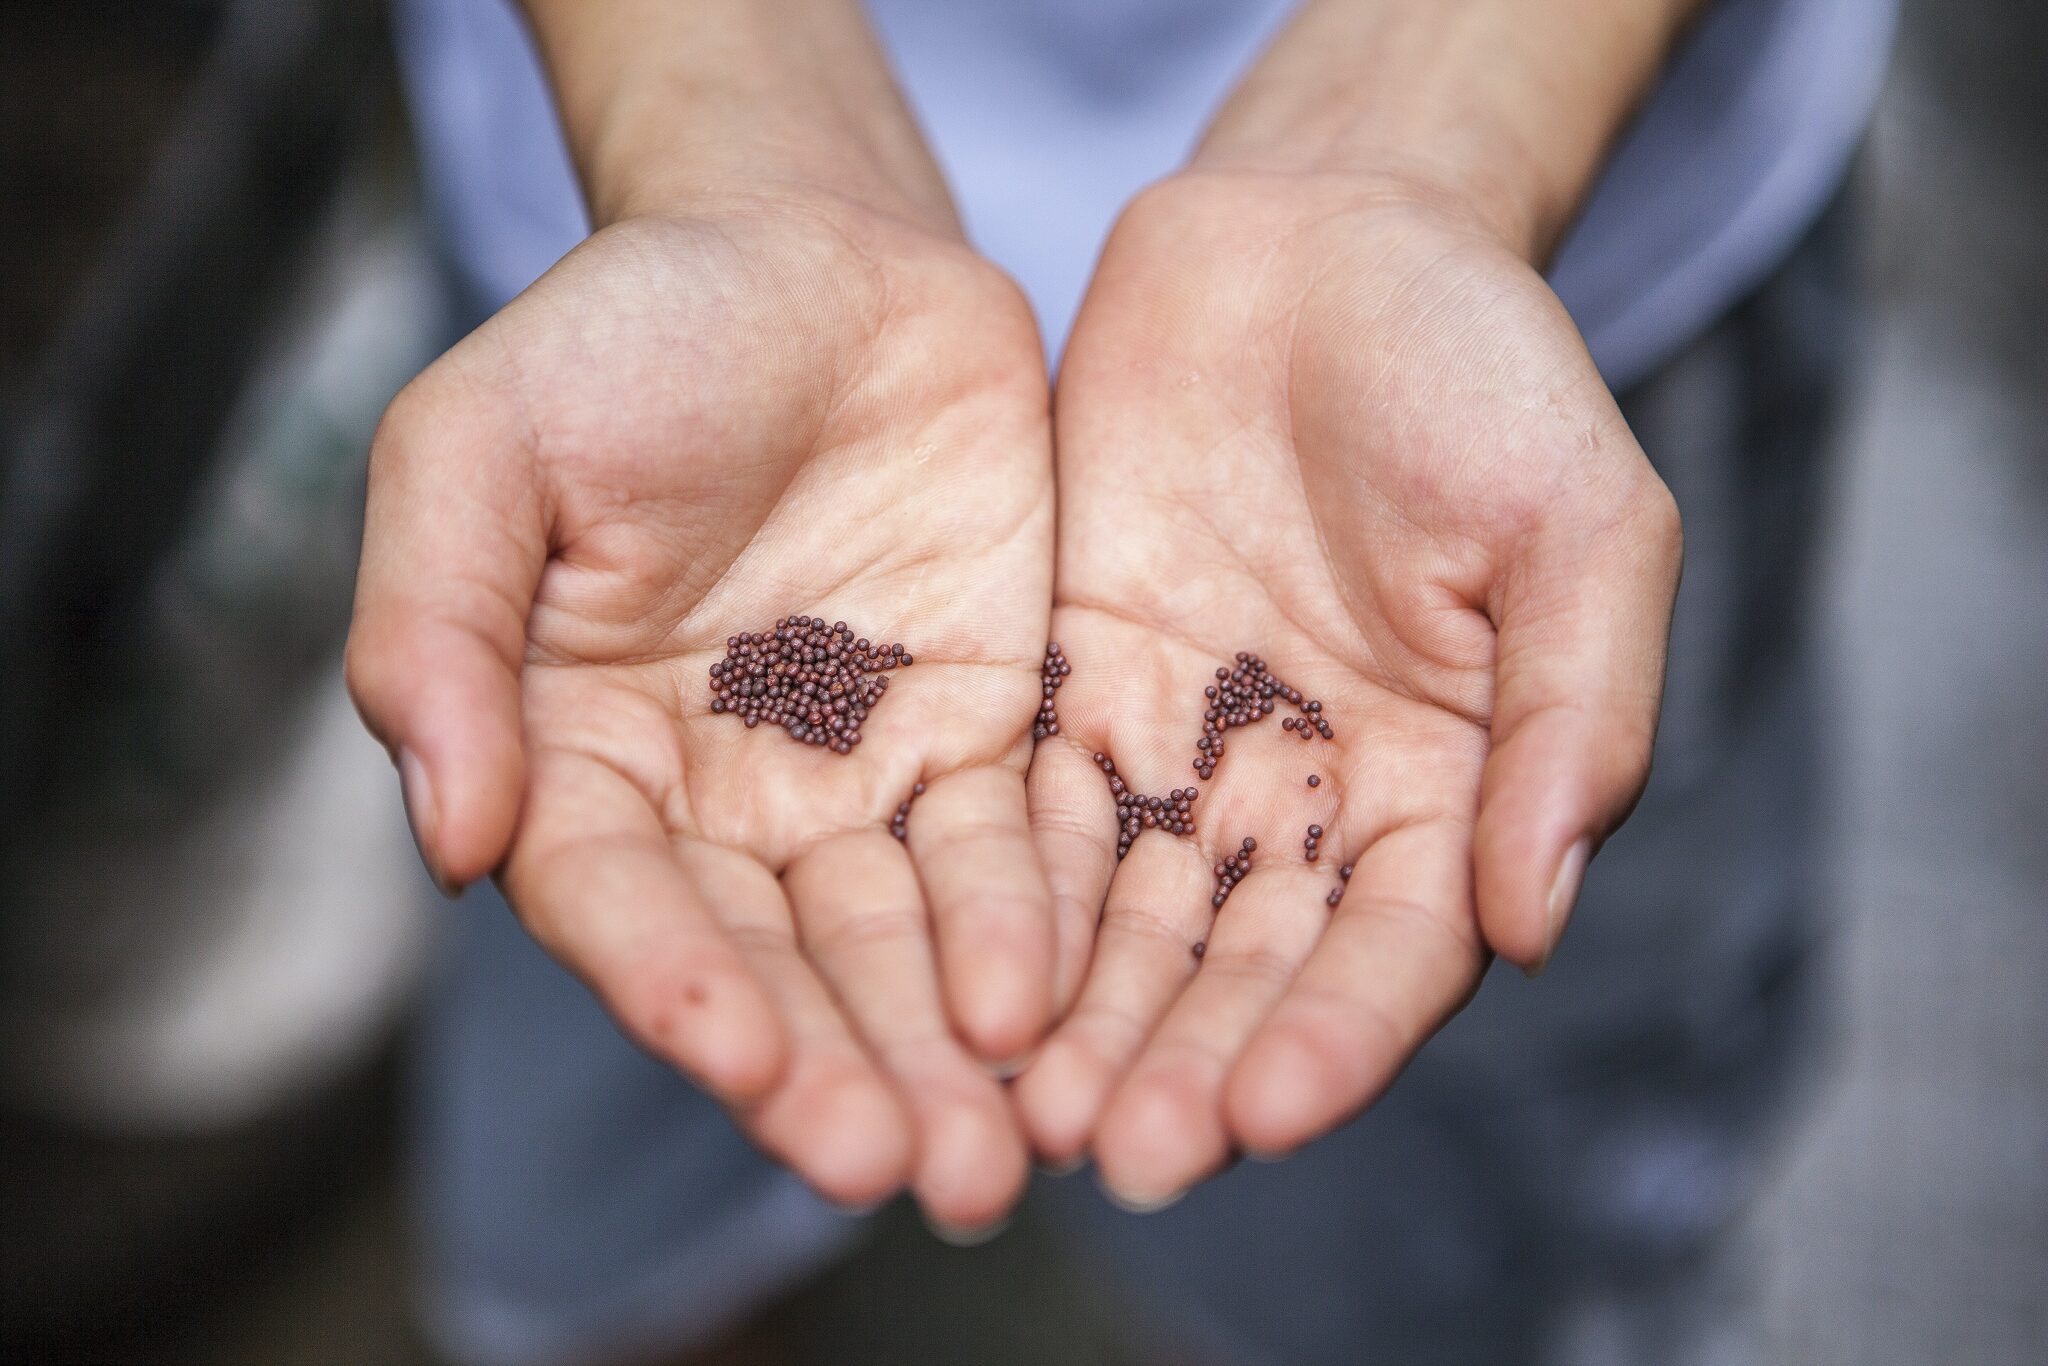 holding seeds | Photo by Joshua Lanzarini on Unsplash